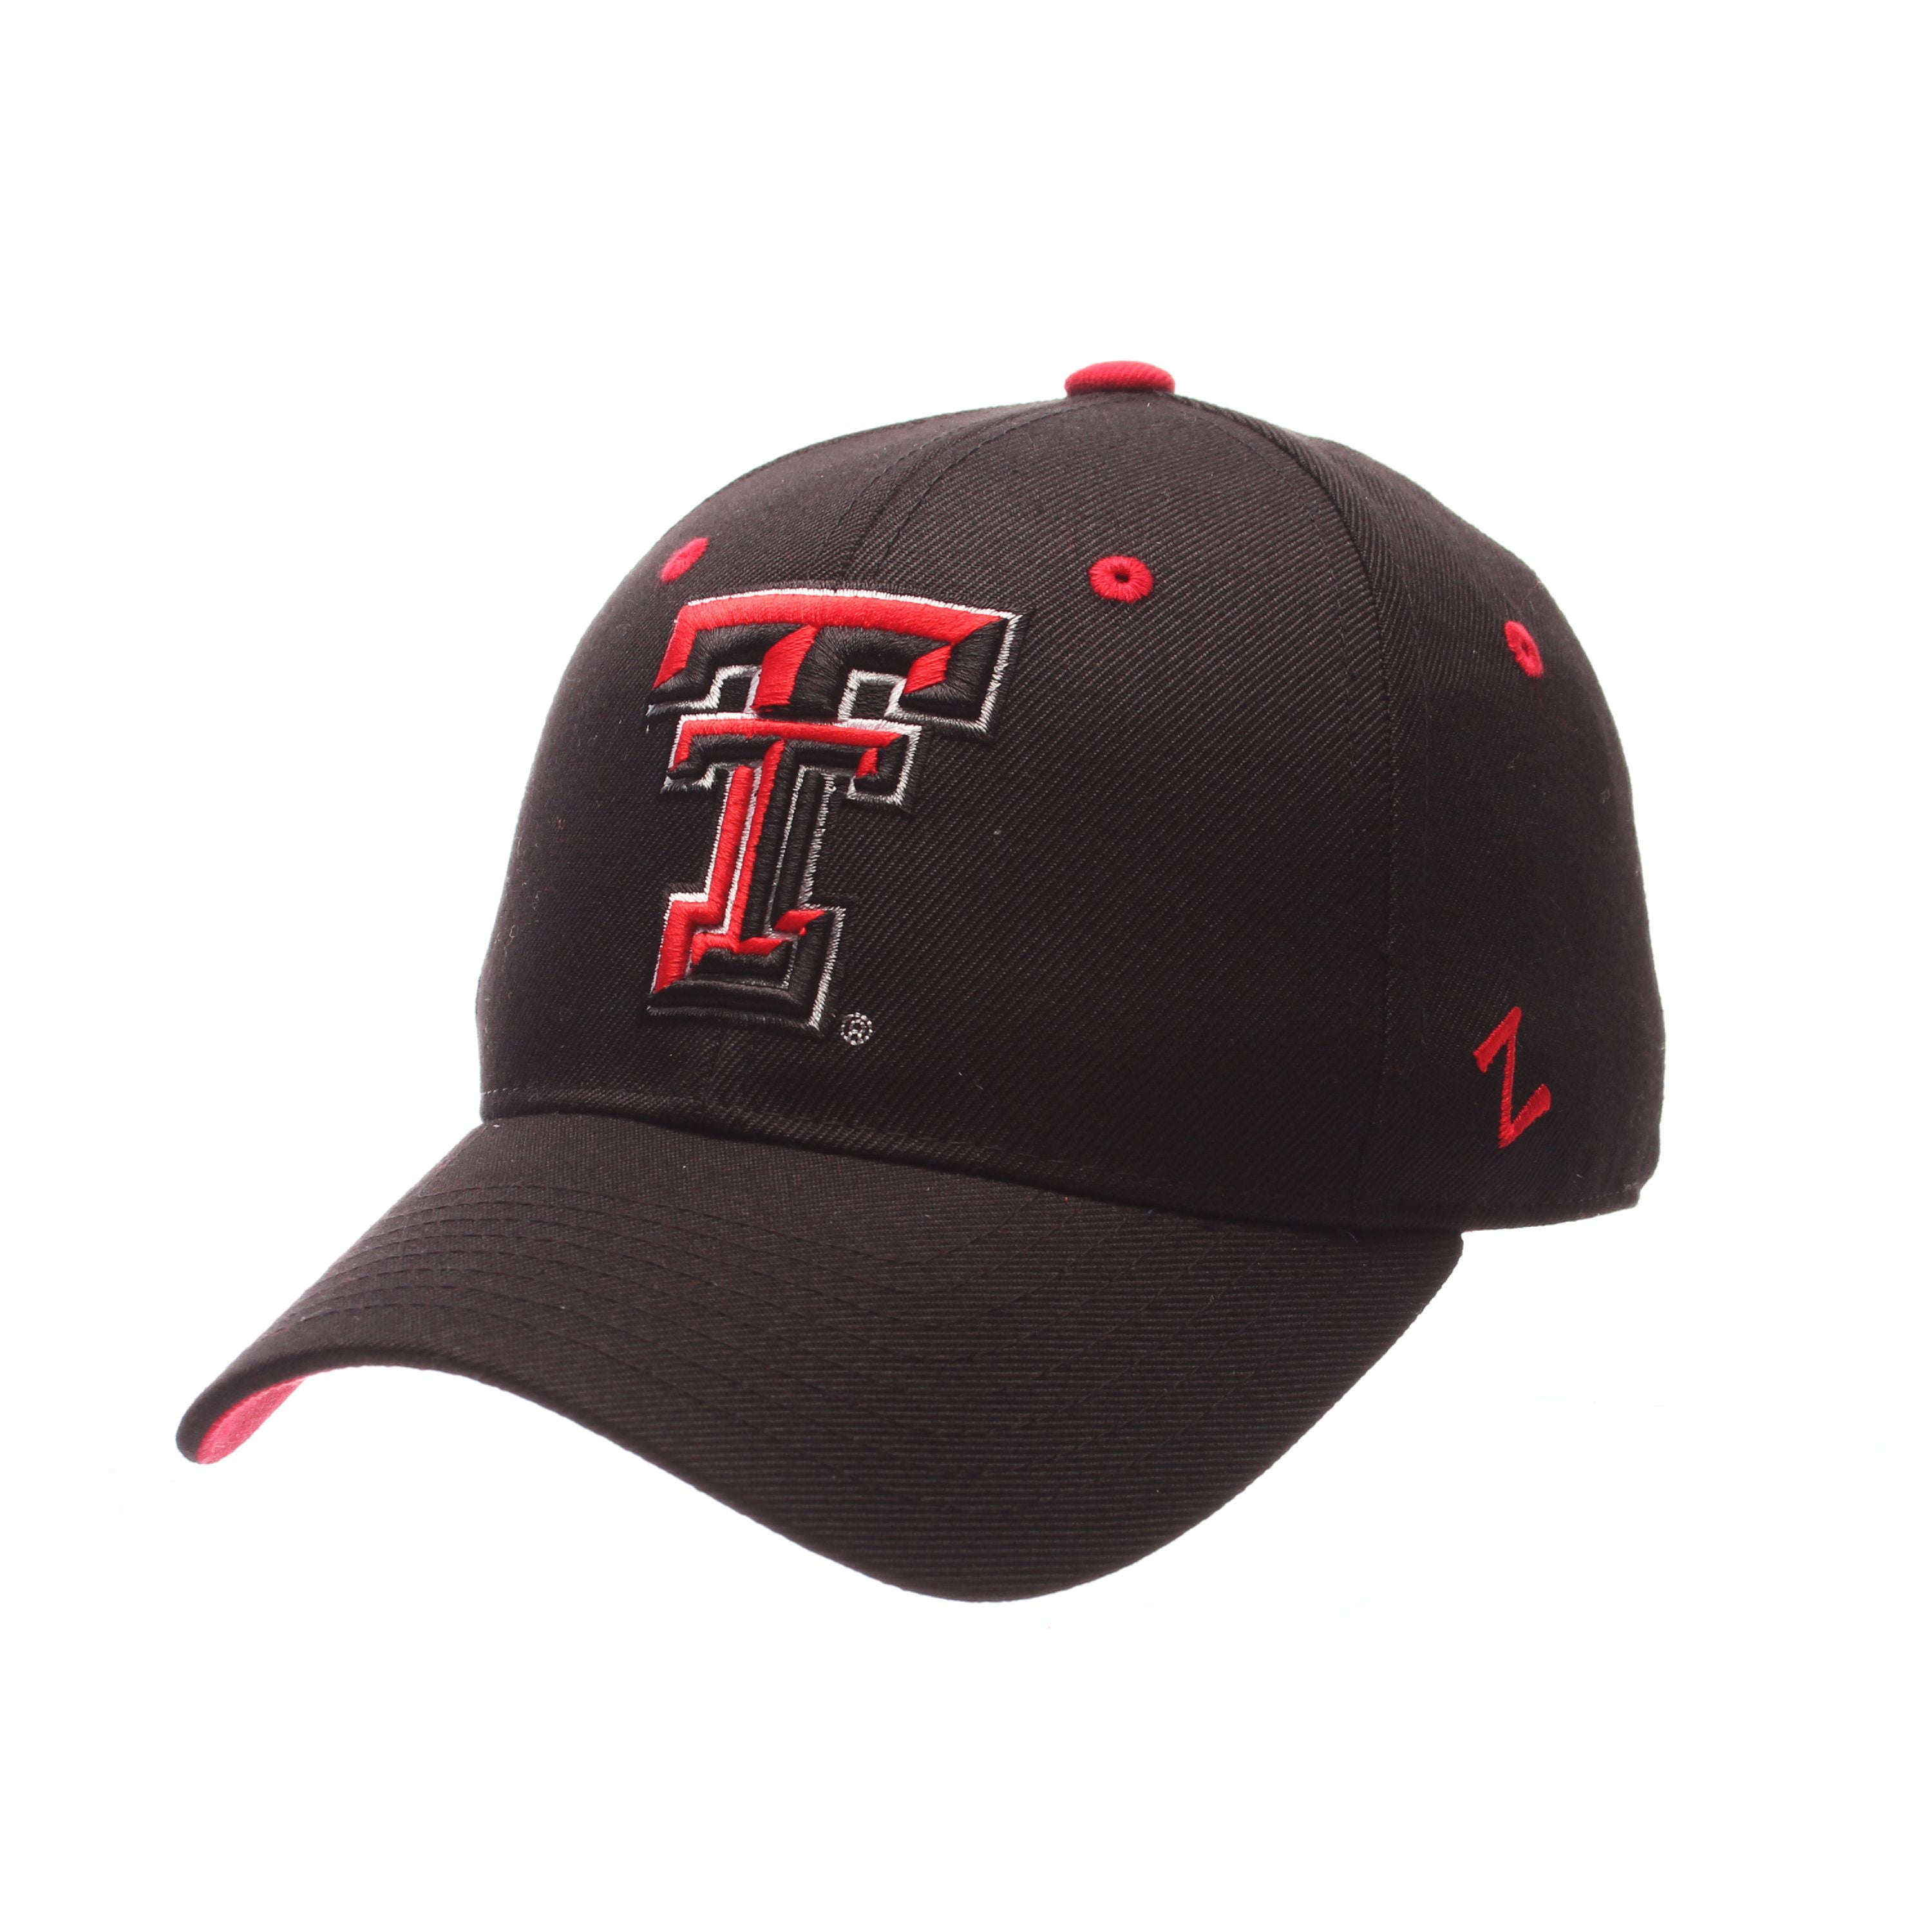 Texas Tech Red Raiders DH Fitted Hat (Black) - Walmart.com - Walmart.com